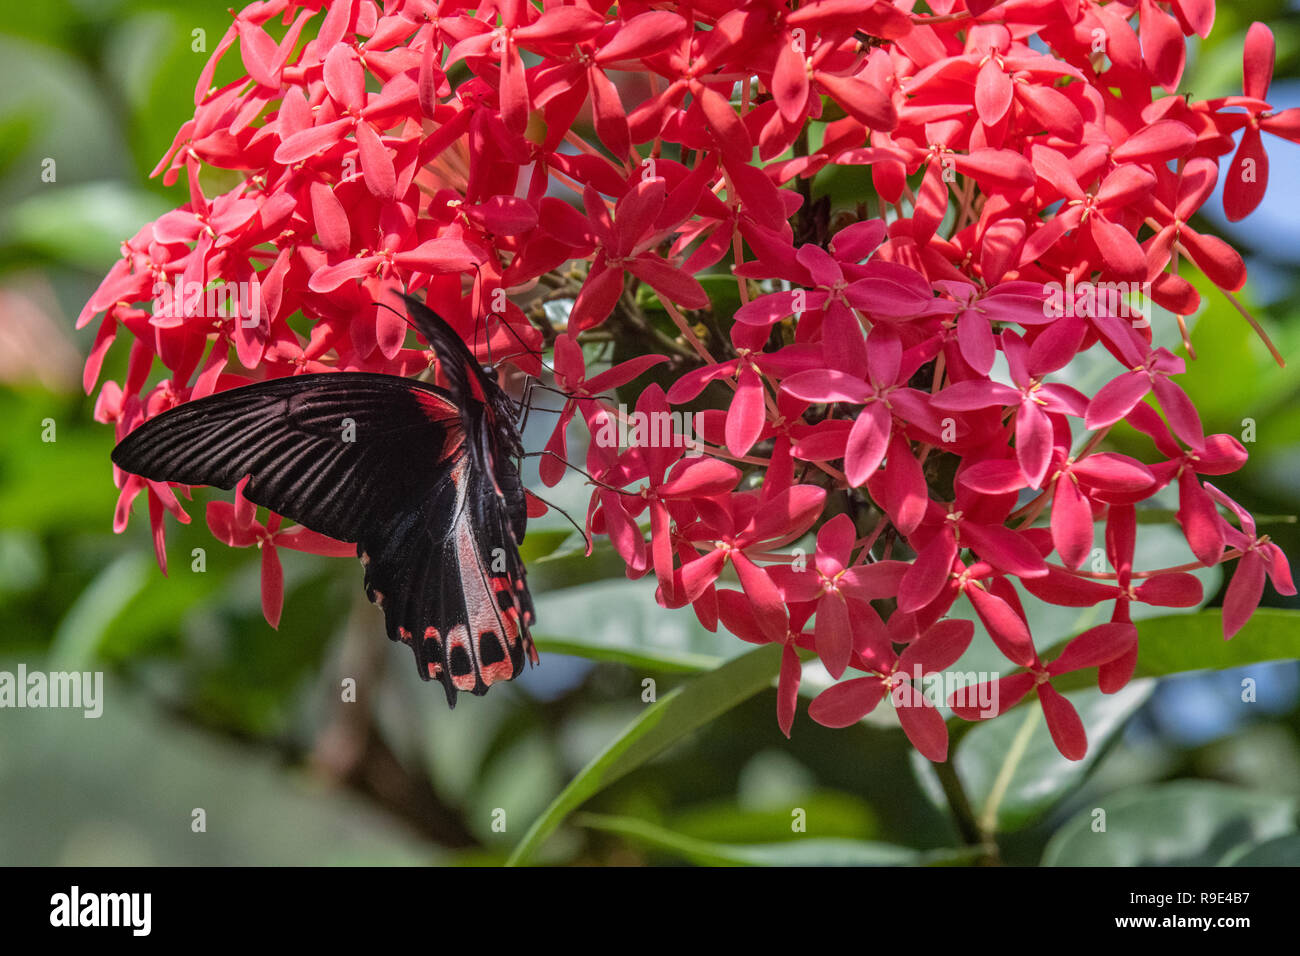 Scarlet swallowtail - Scarlet Mormon butterfly - Papilio rumanzovia in a butterfly garden - native Australian butterfly Stock Photo